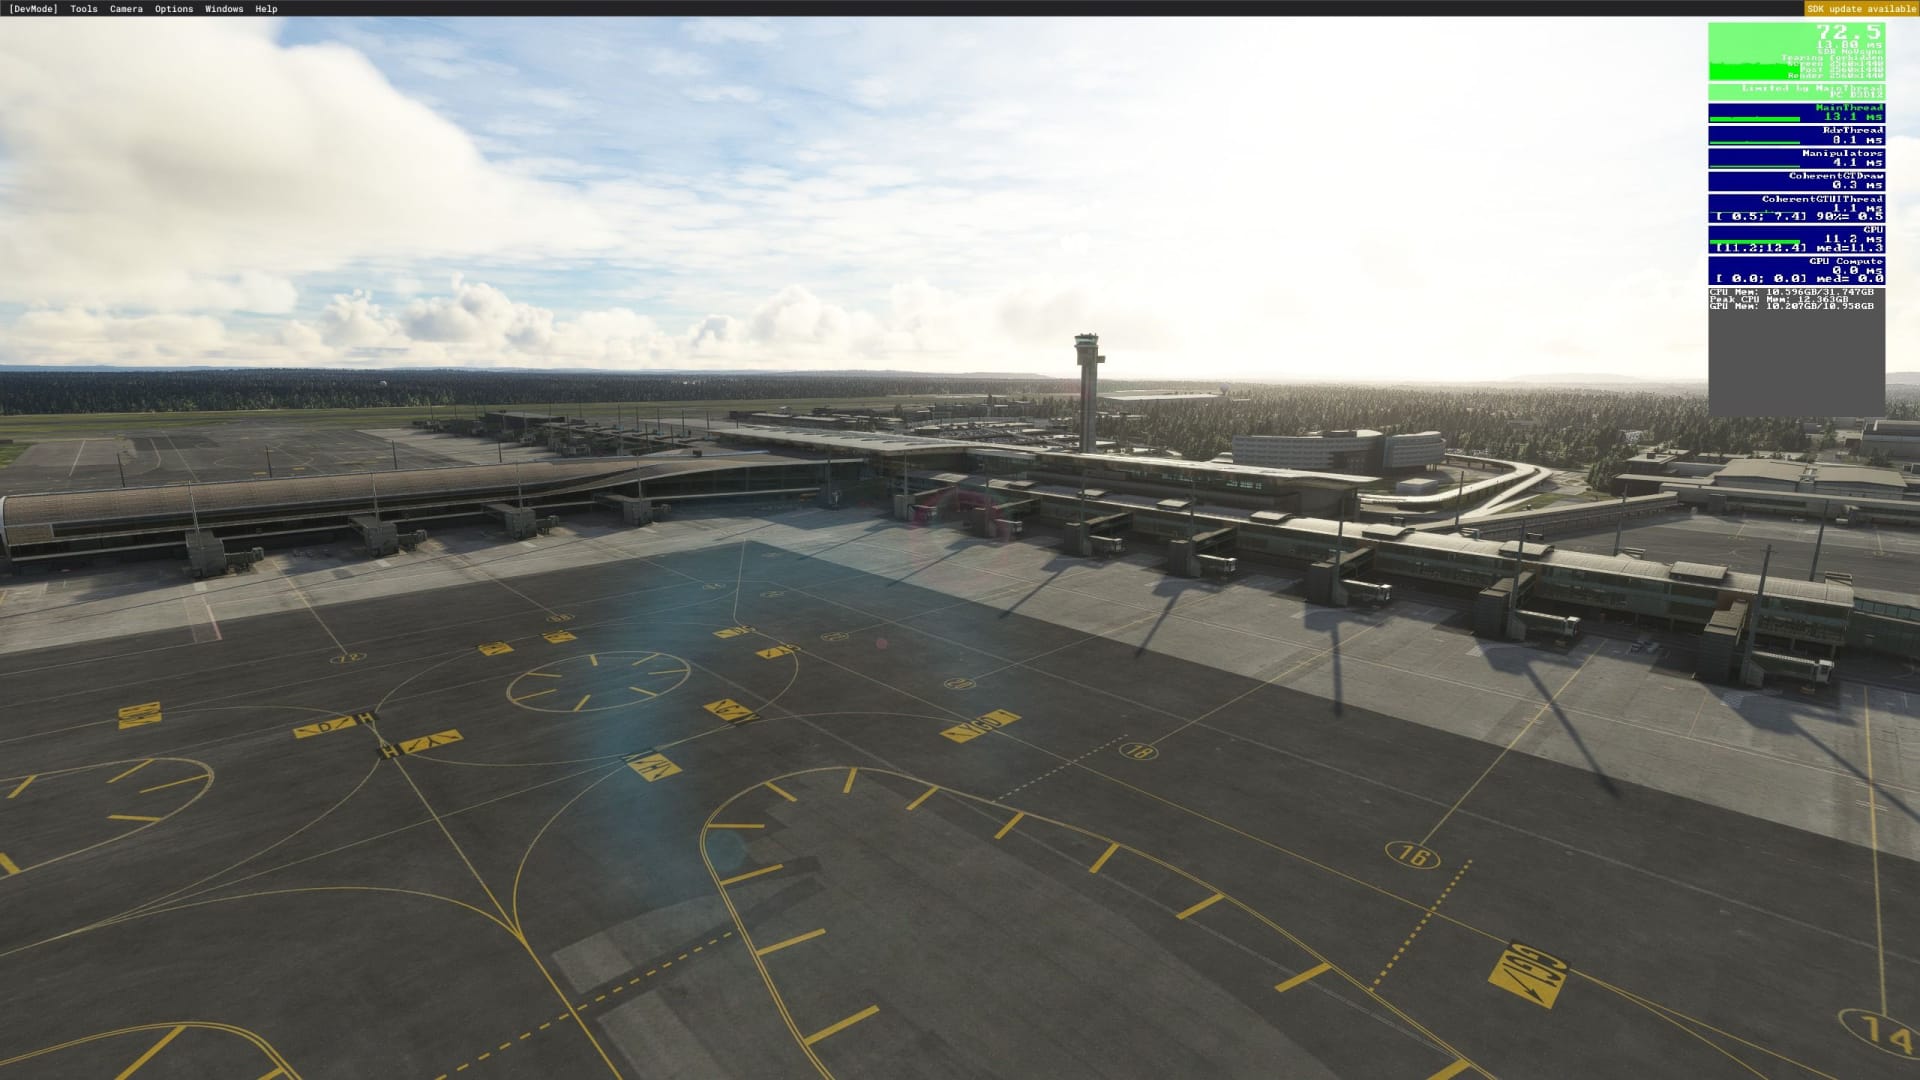 Oslo Airport for Microsoft Flight Simulator by Orbx